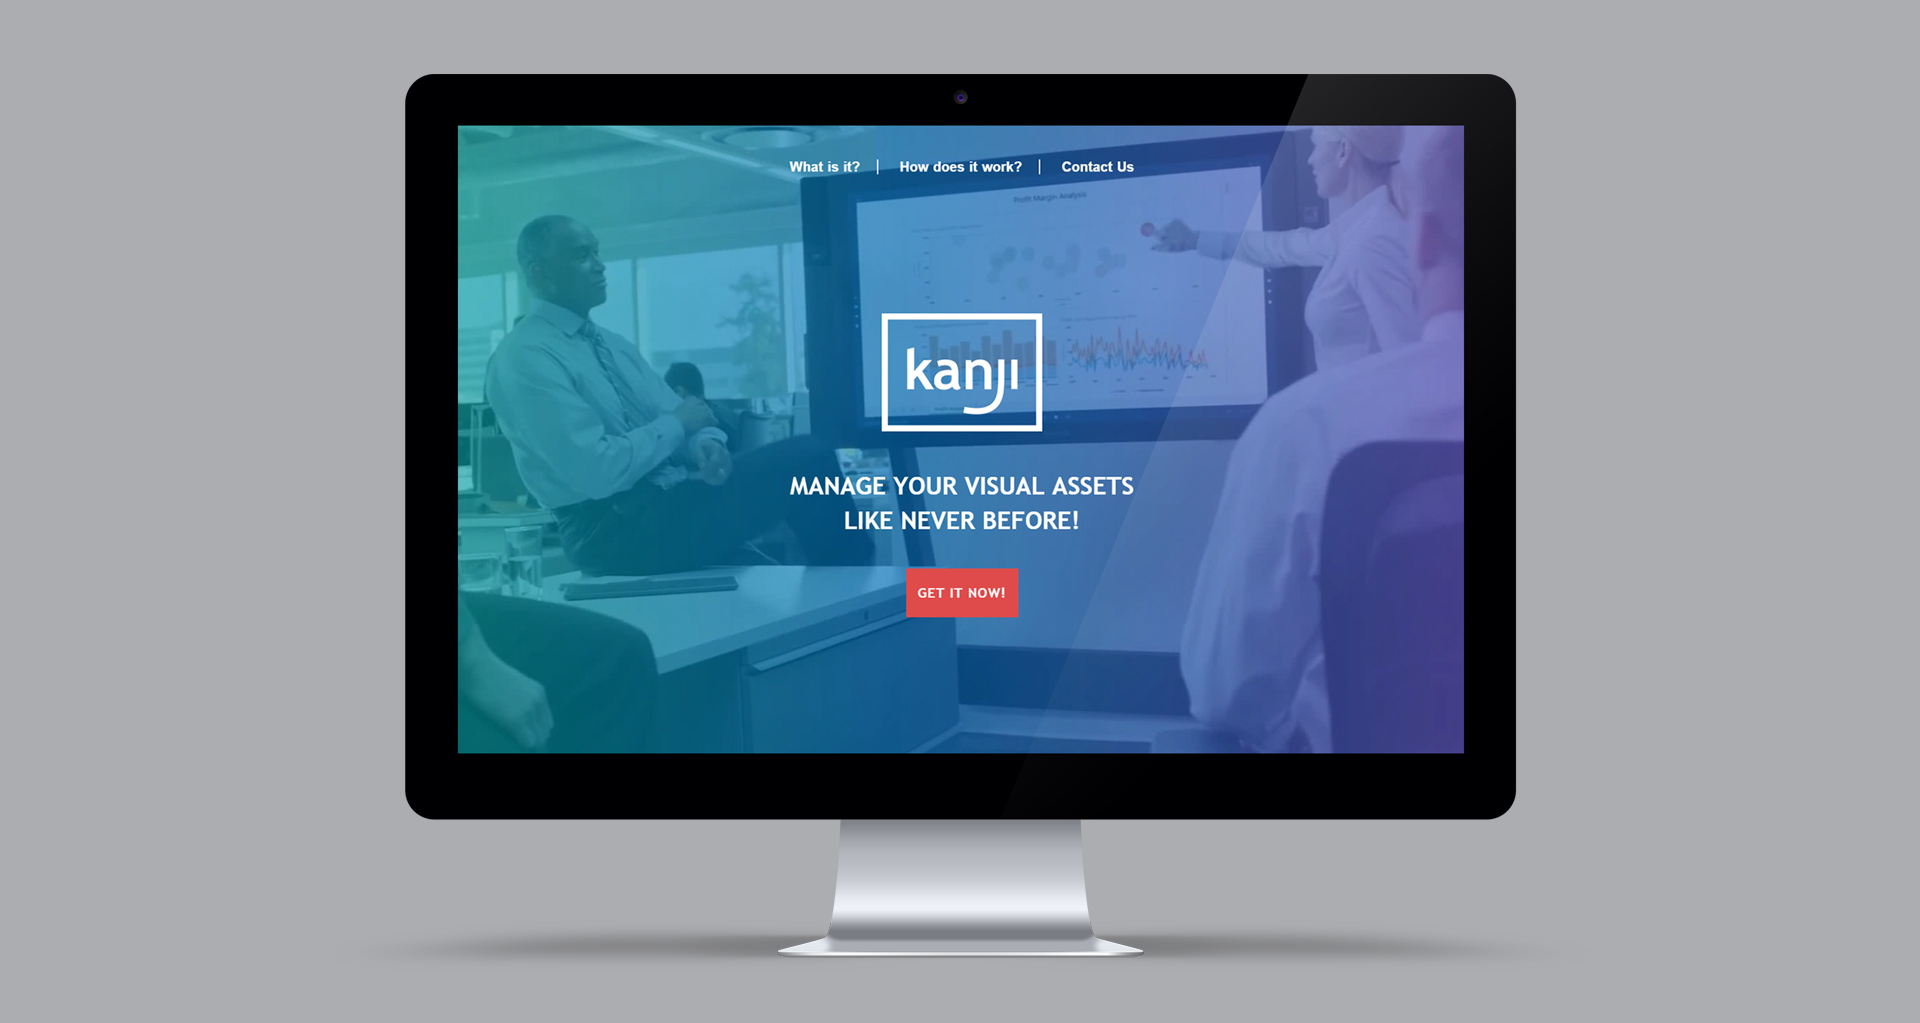 
Kanji promotional website
